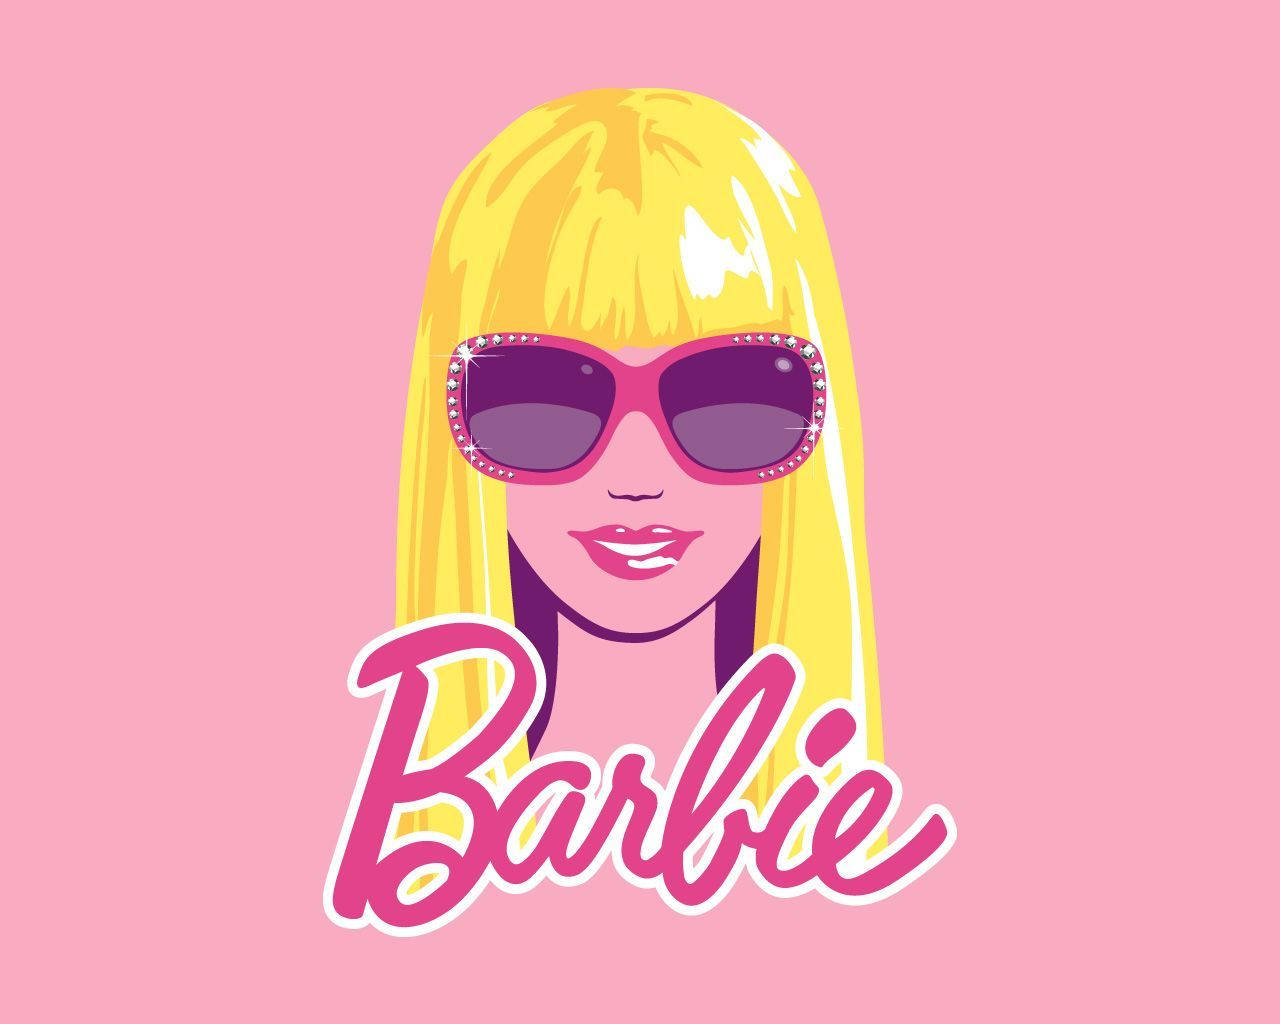 "Make a Statement With Digital Pop Art Barbie" Wallpaper